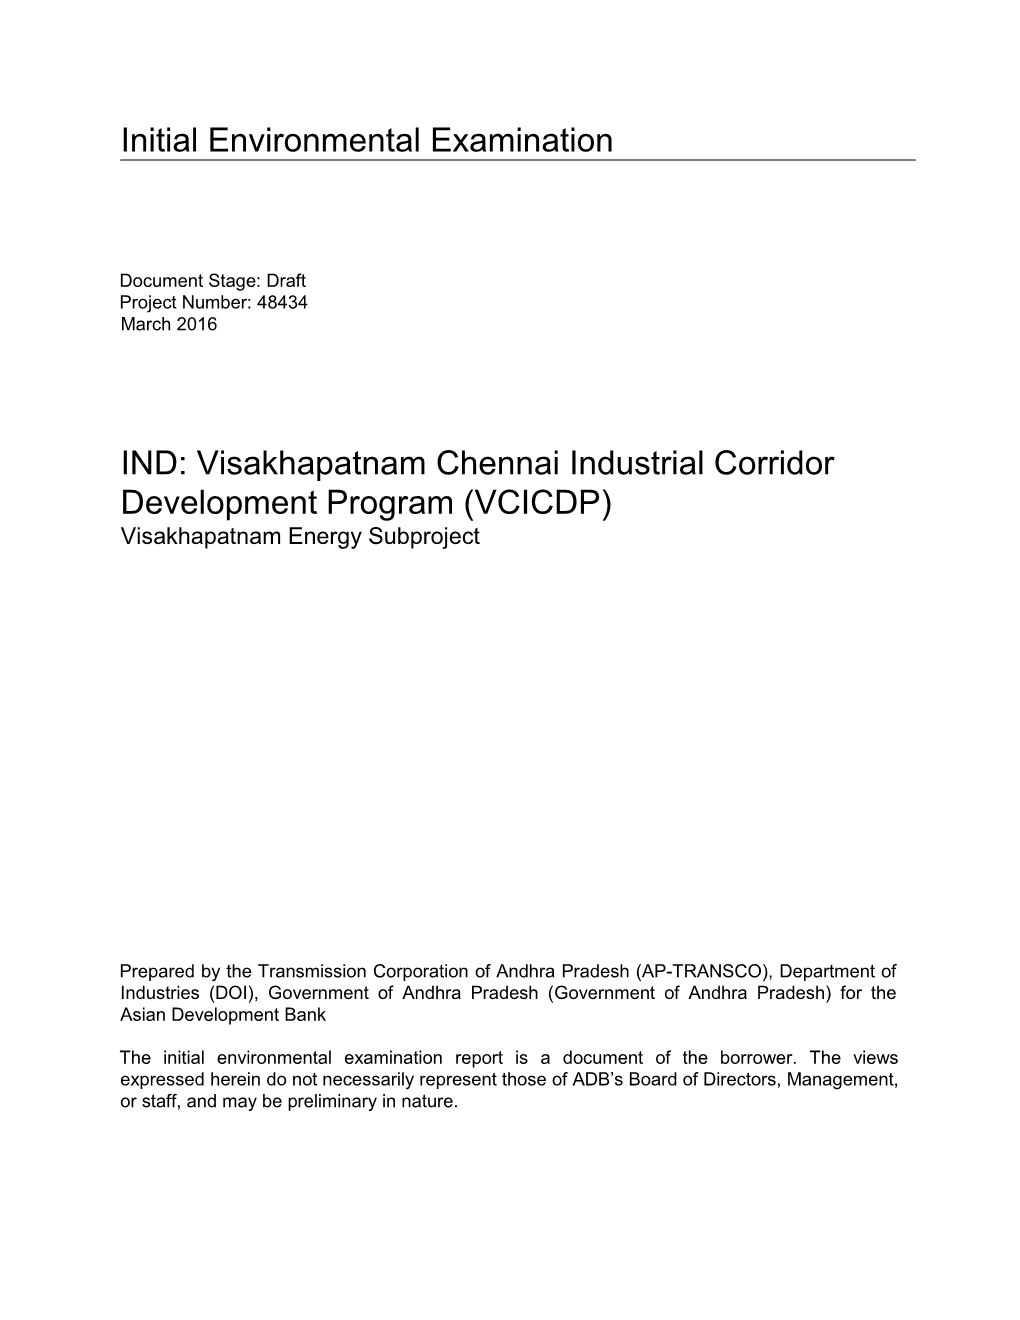 Visakhapatnam Chennai Industrial Corridor Development Program (VCICDP) Visakhapatnam Energy Subproject